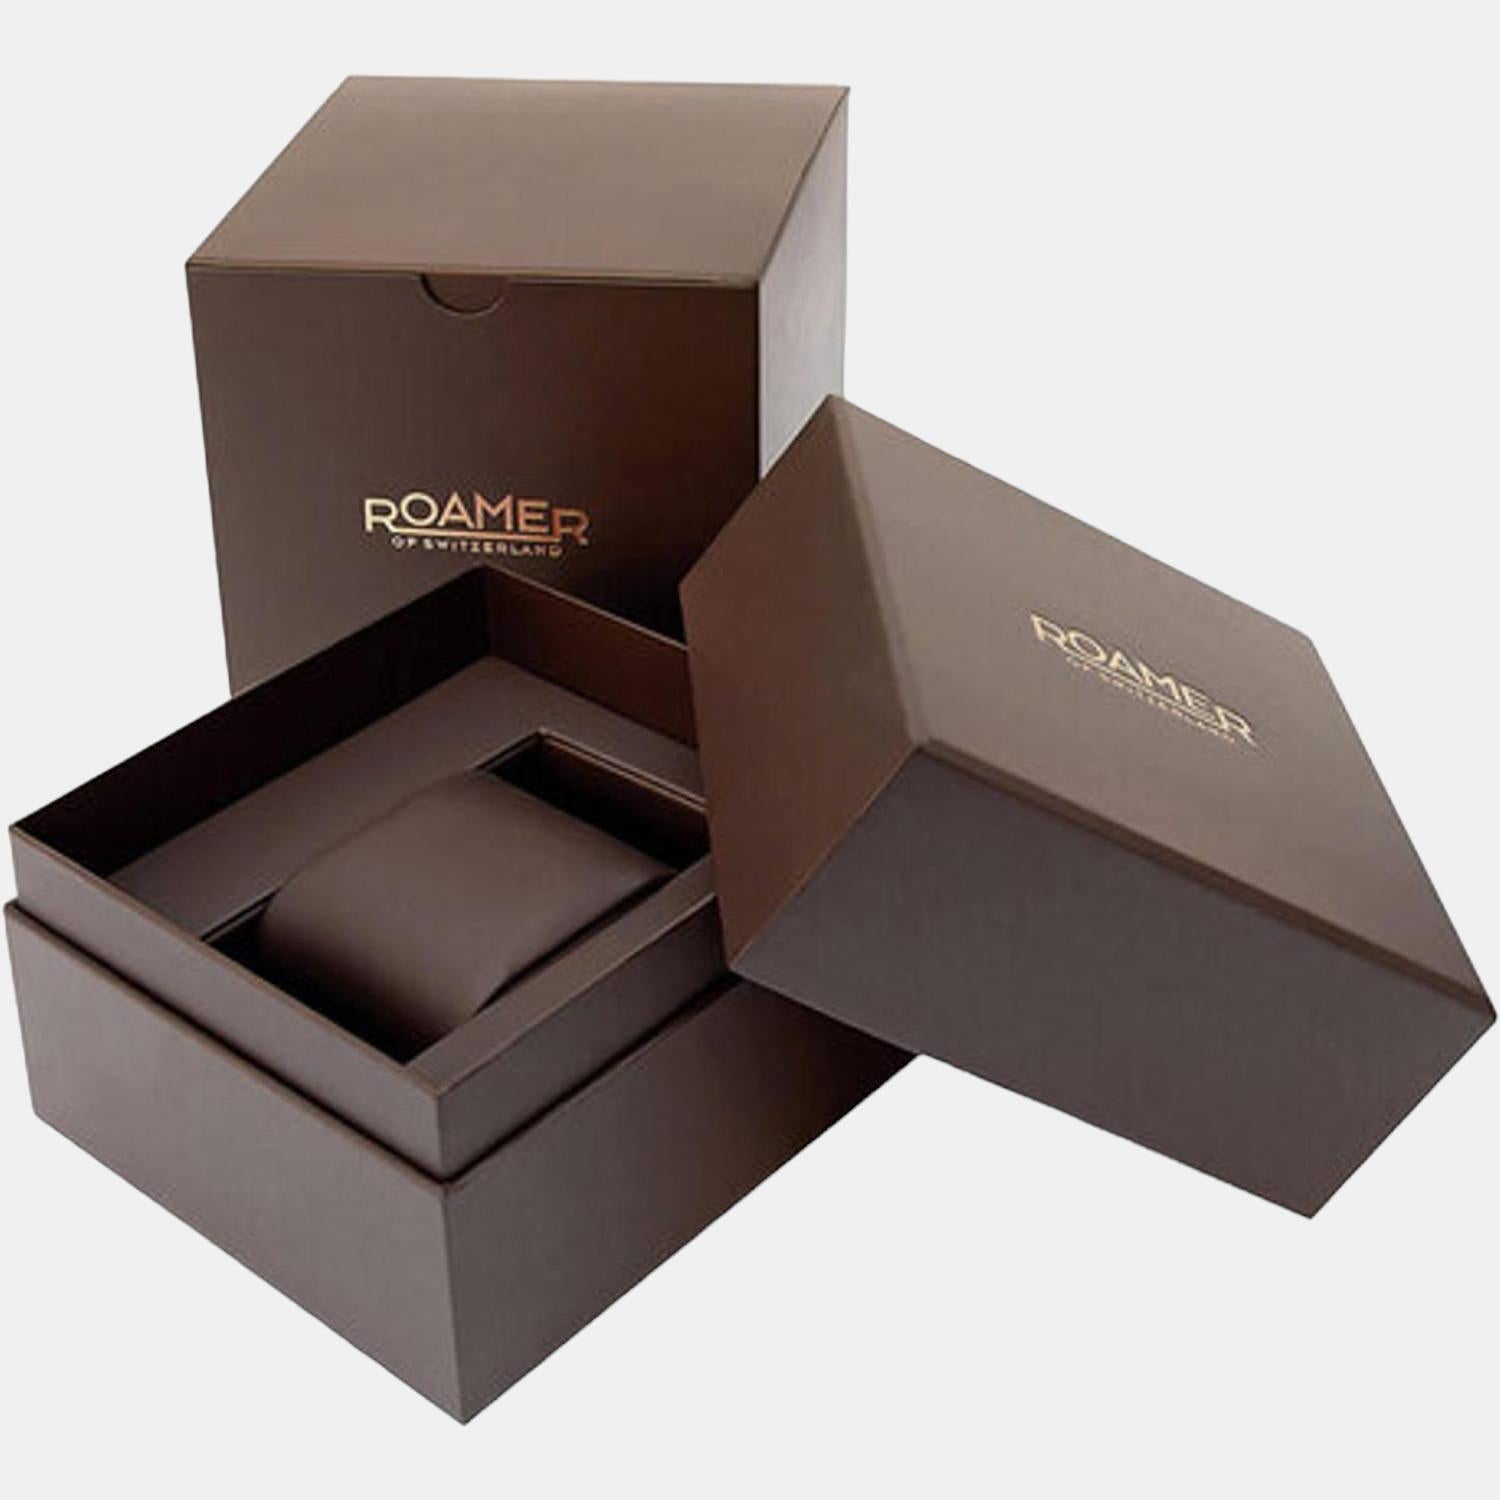 roamer-stainless-steel-brown-analog-female-watch-601857-49-79-20